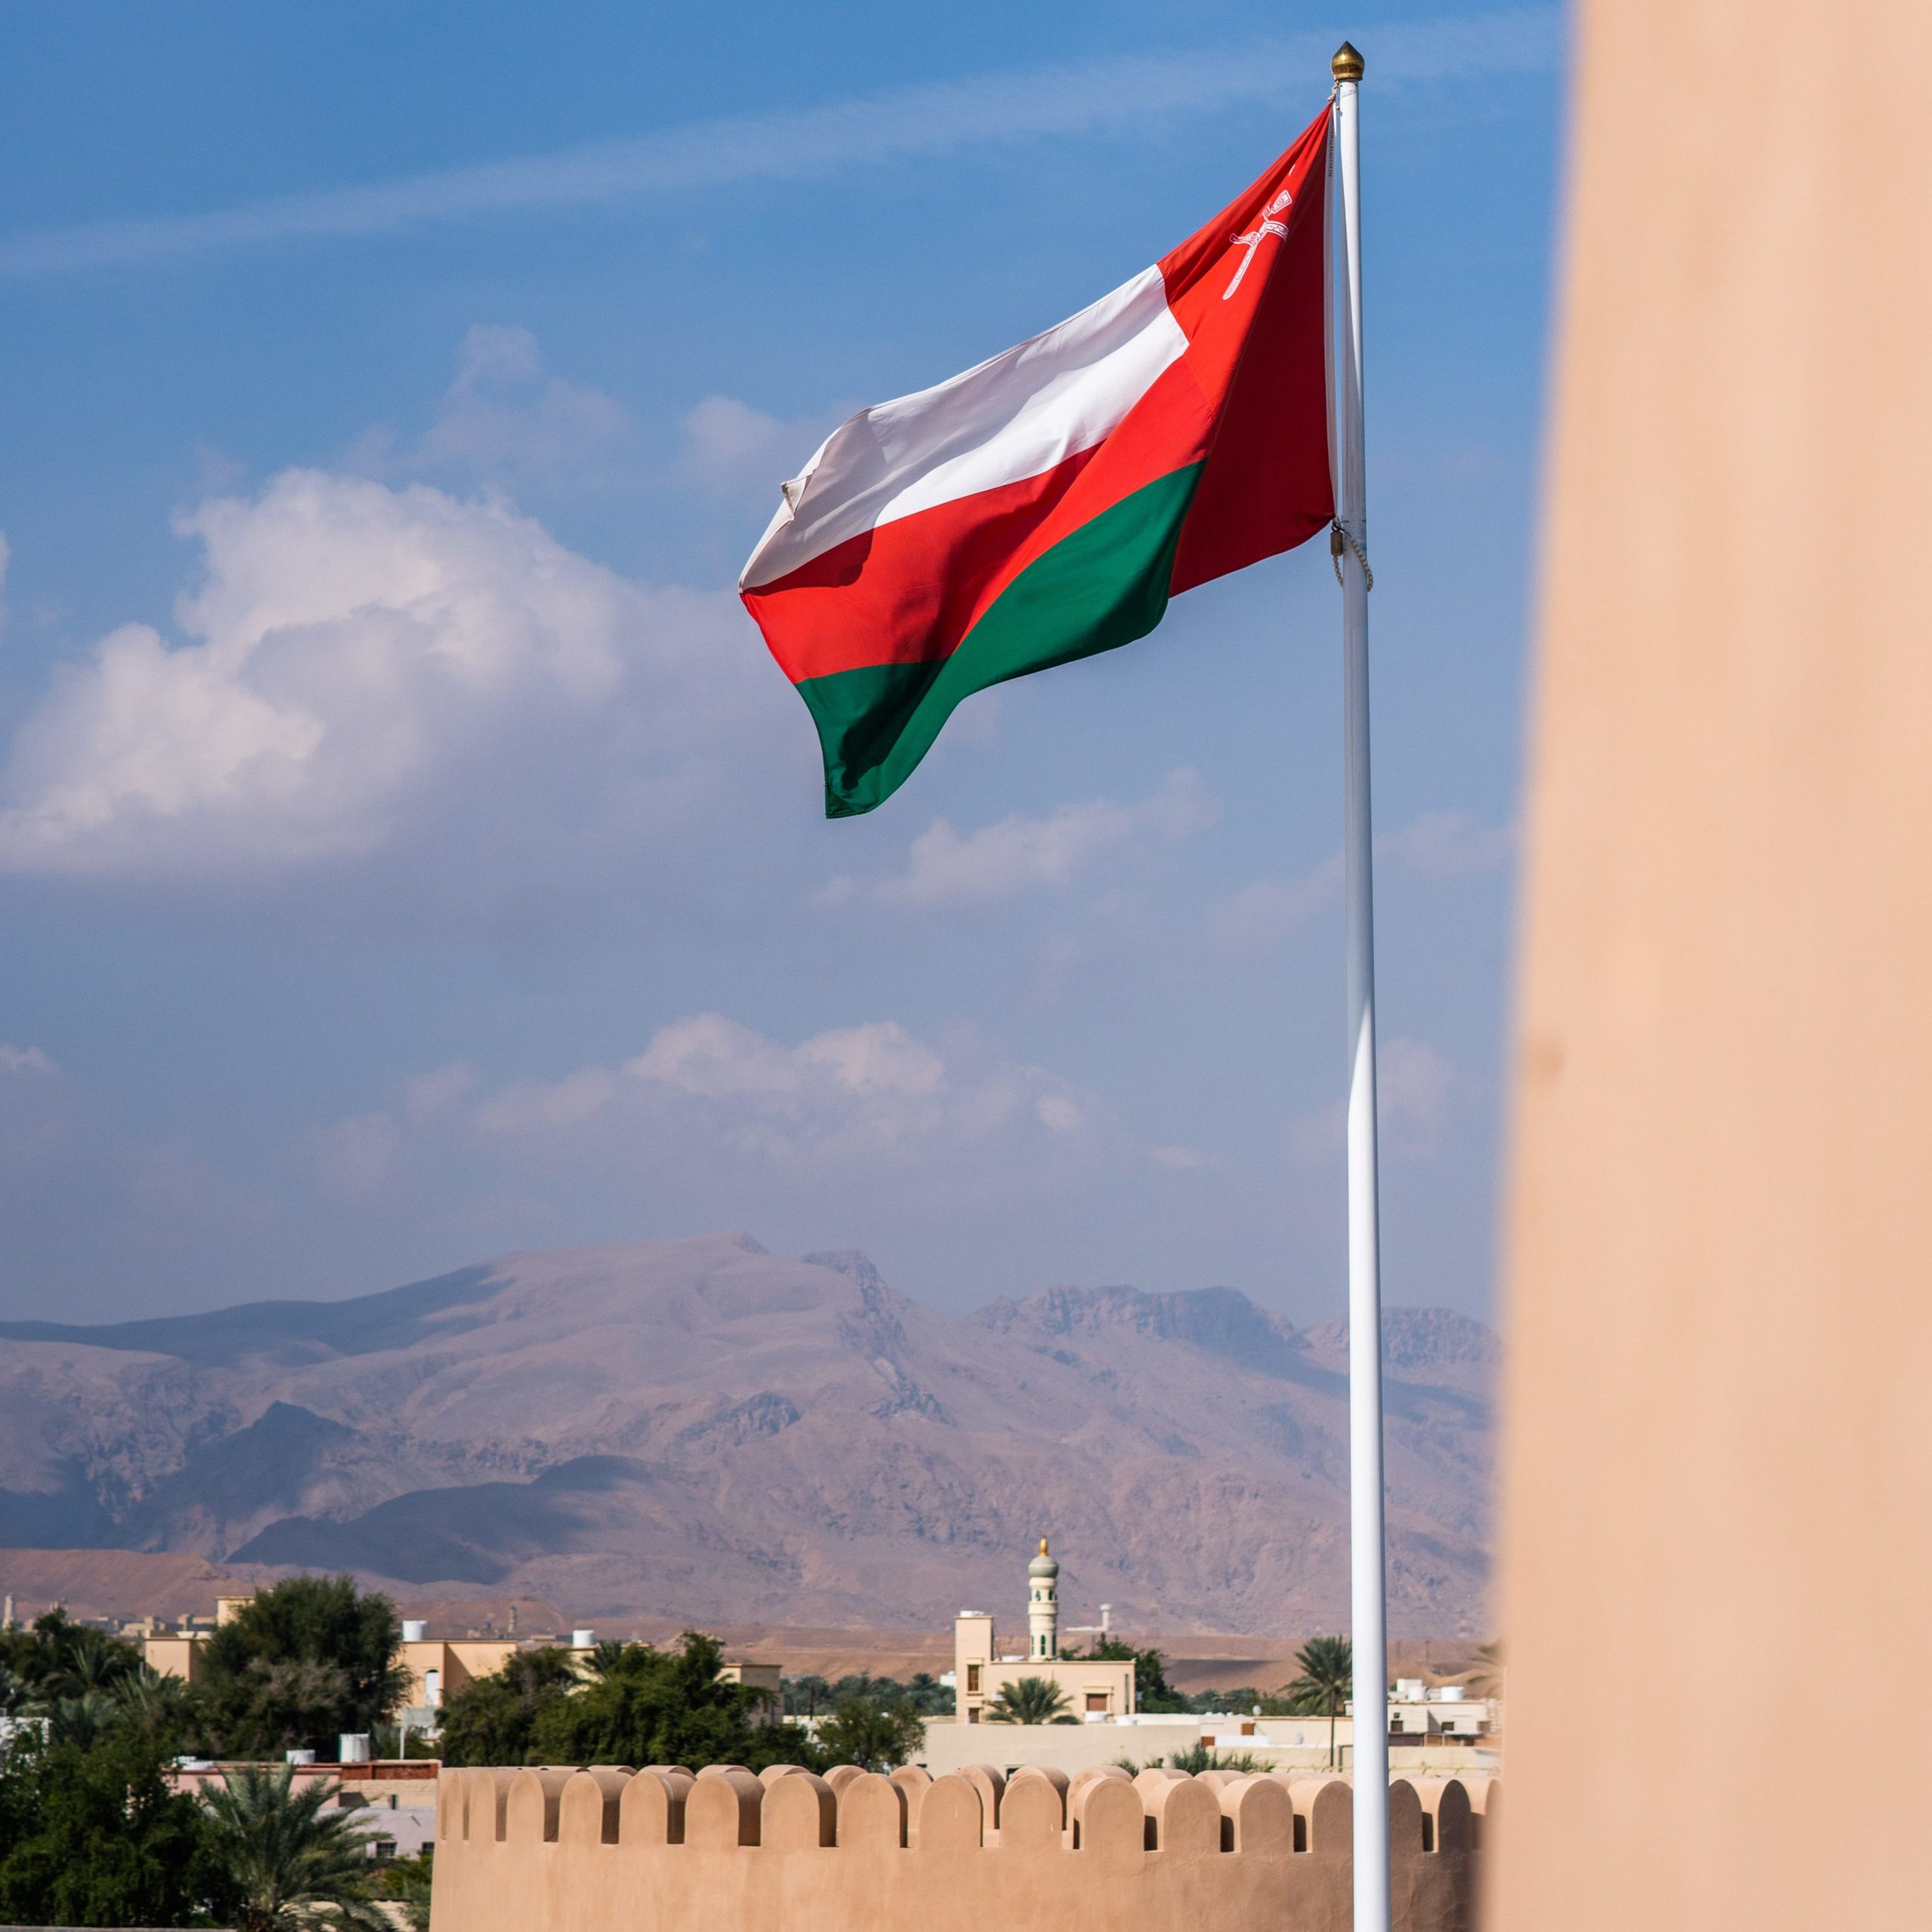 Oman's National Day falls on November 18th
